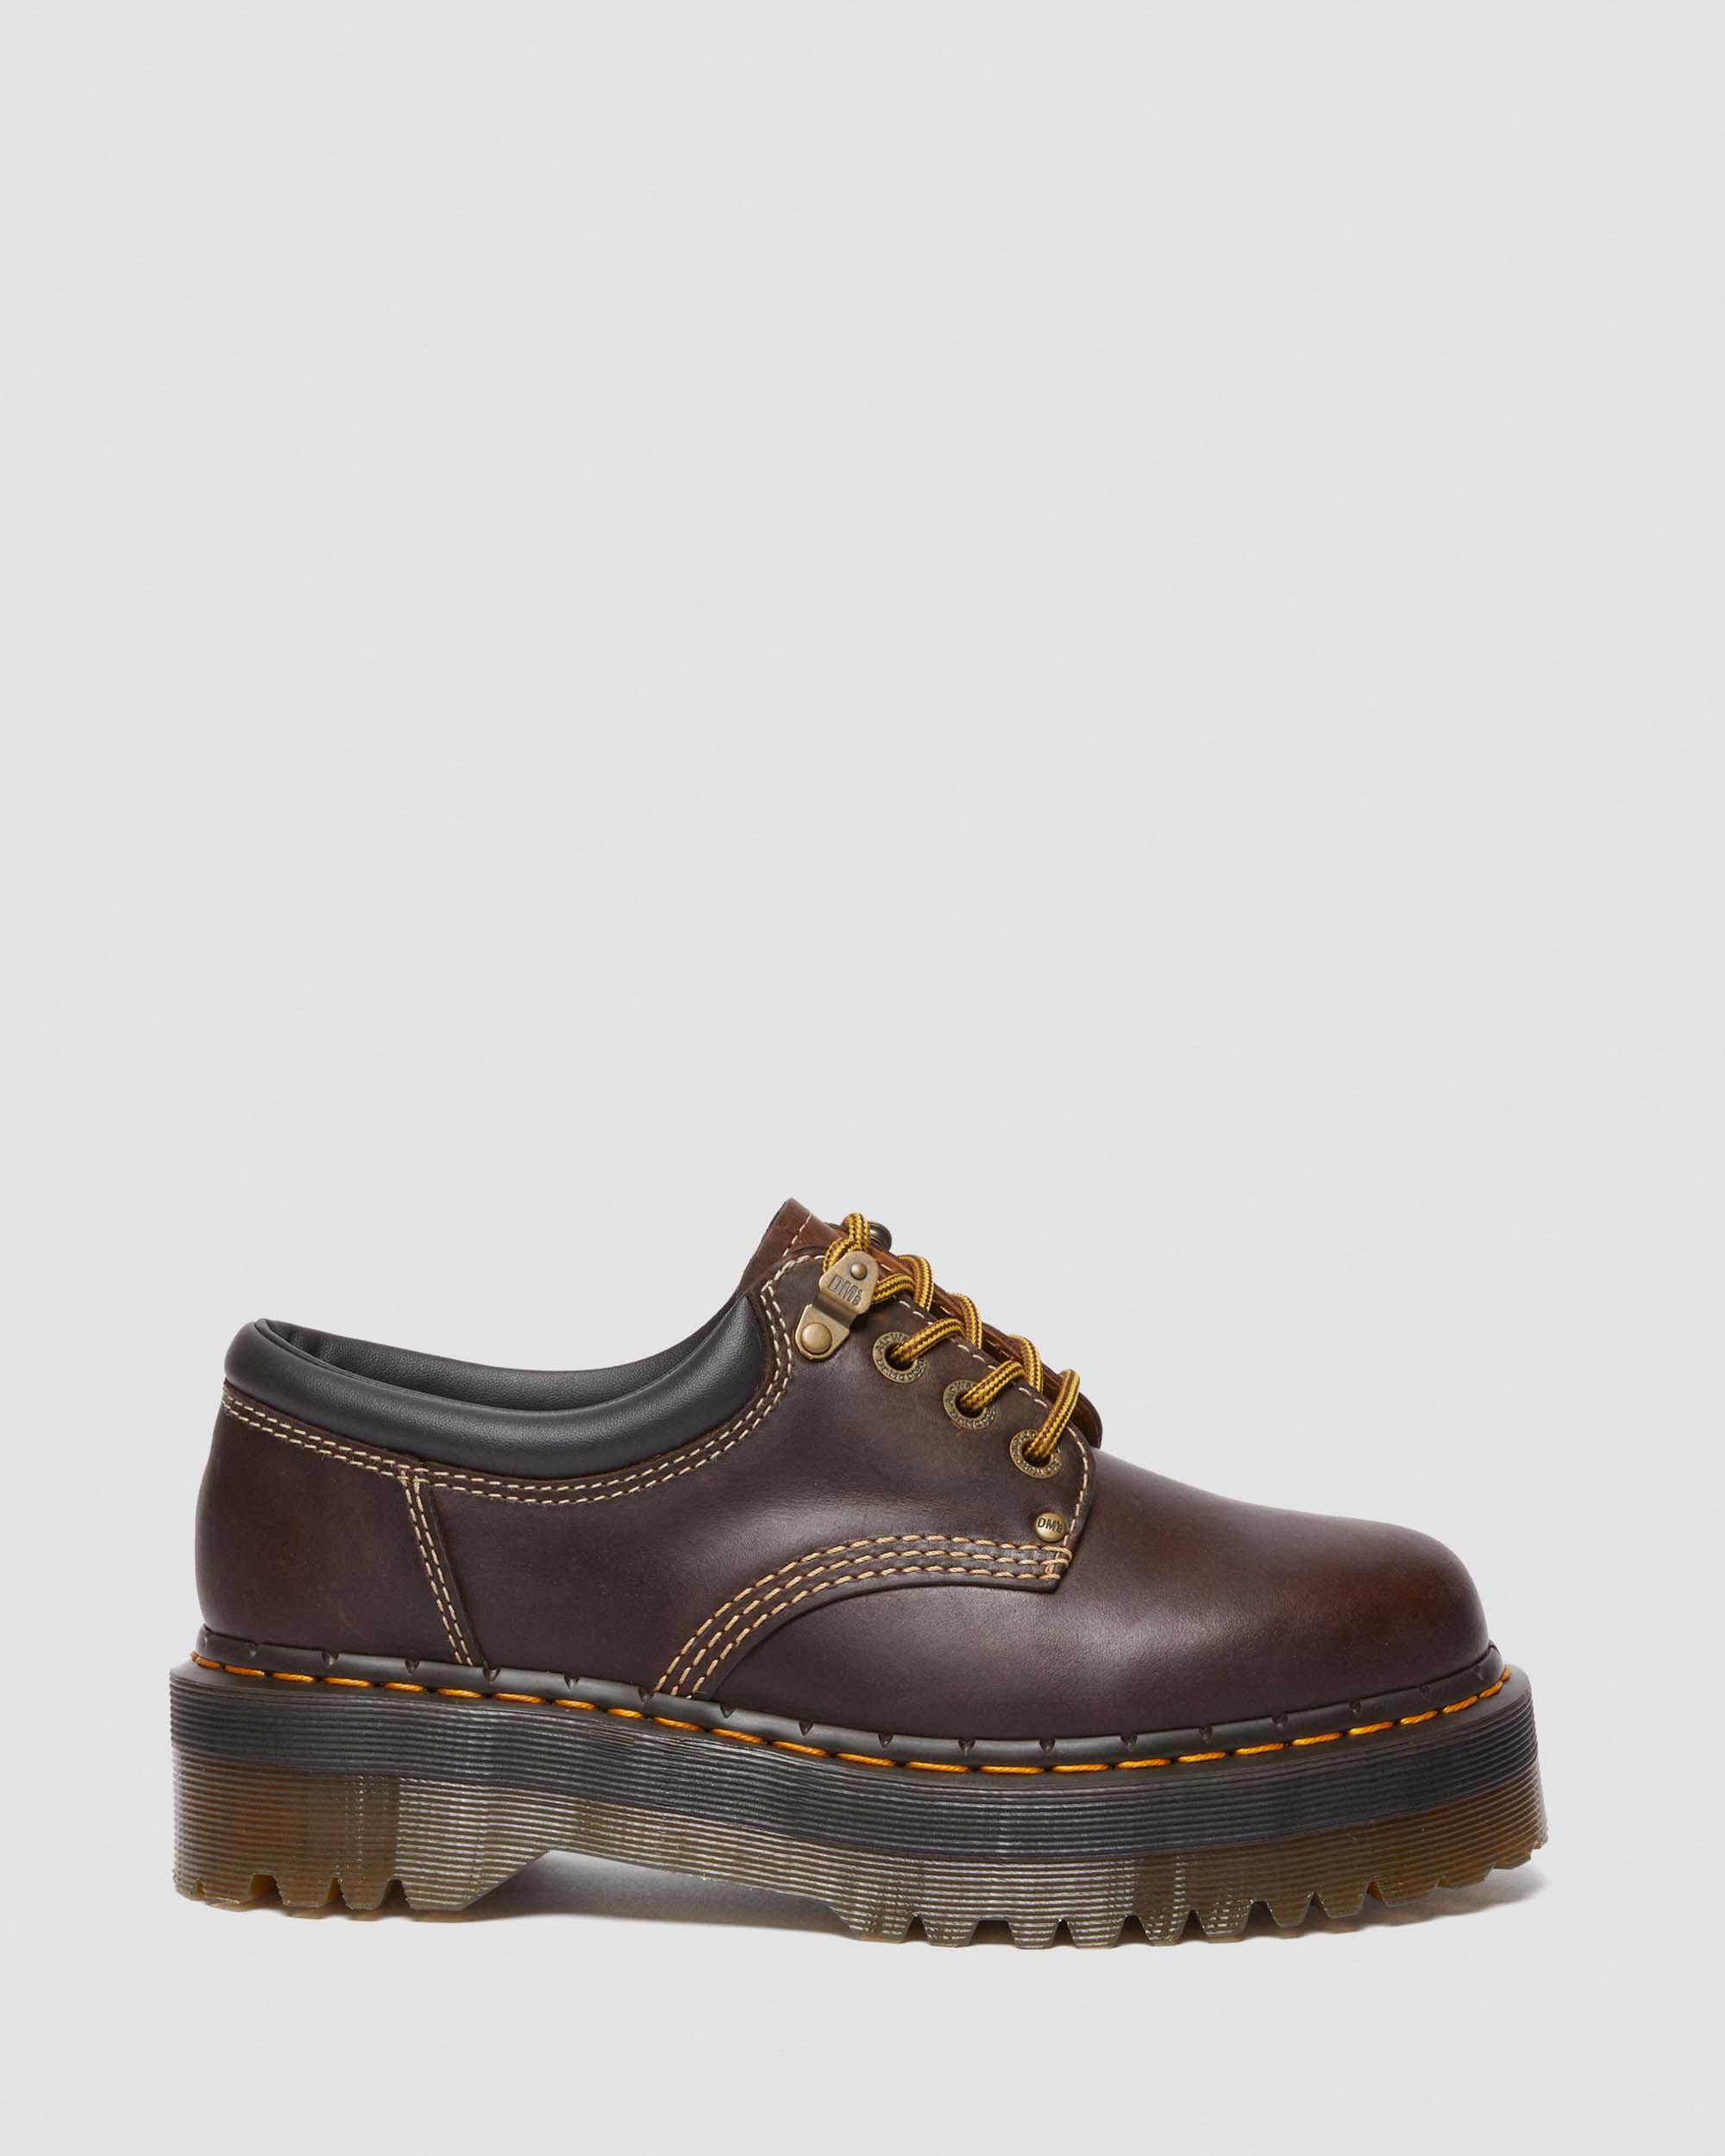 8053 Quad II Crazy Horse Leather Platform Shoes in Dark Brown